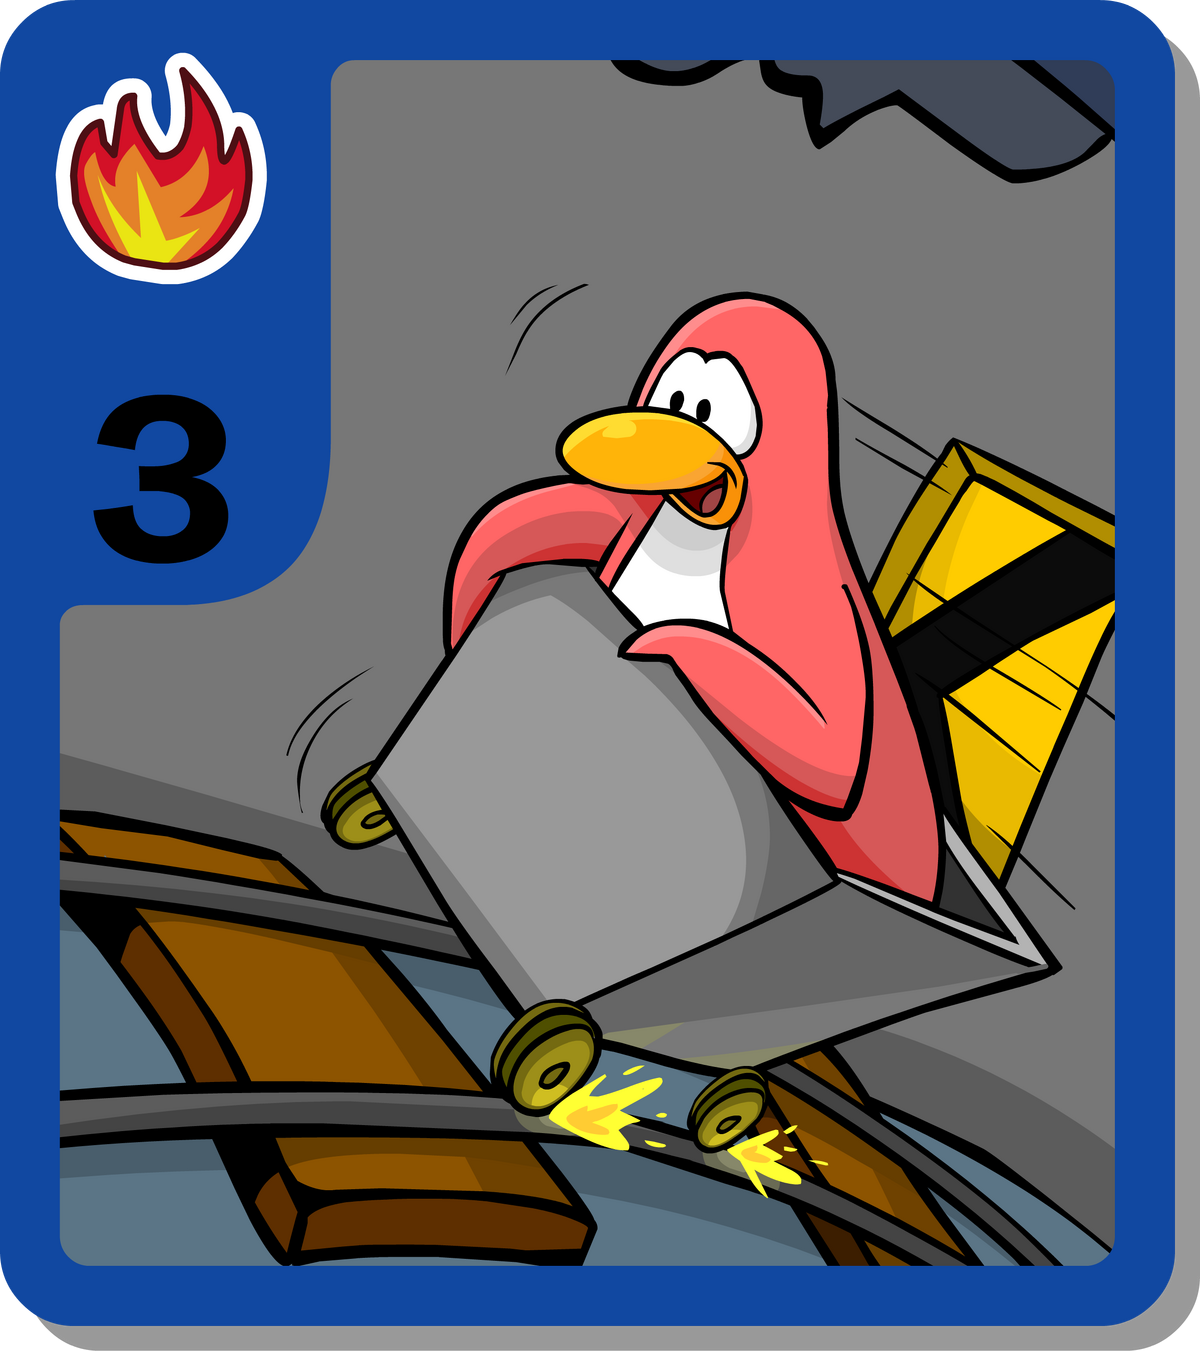 Disney TOPPS Club Penguin Trading Card Power Card Switc